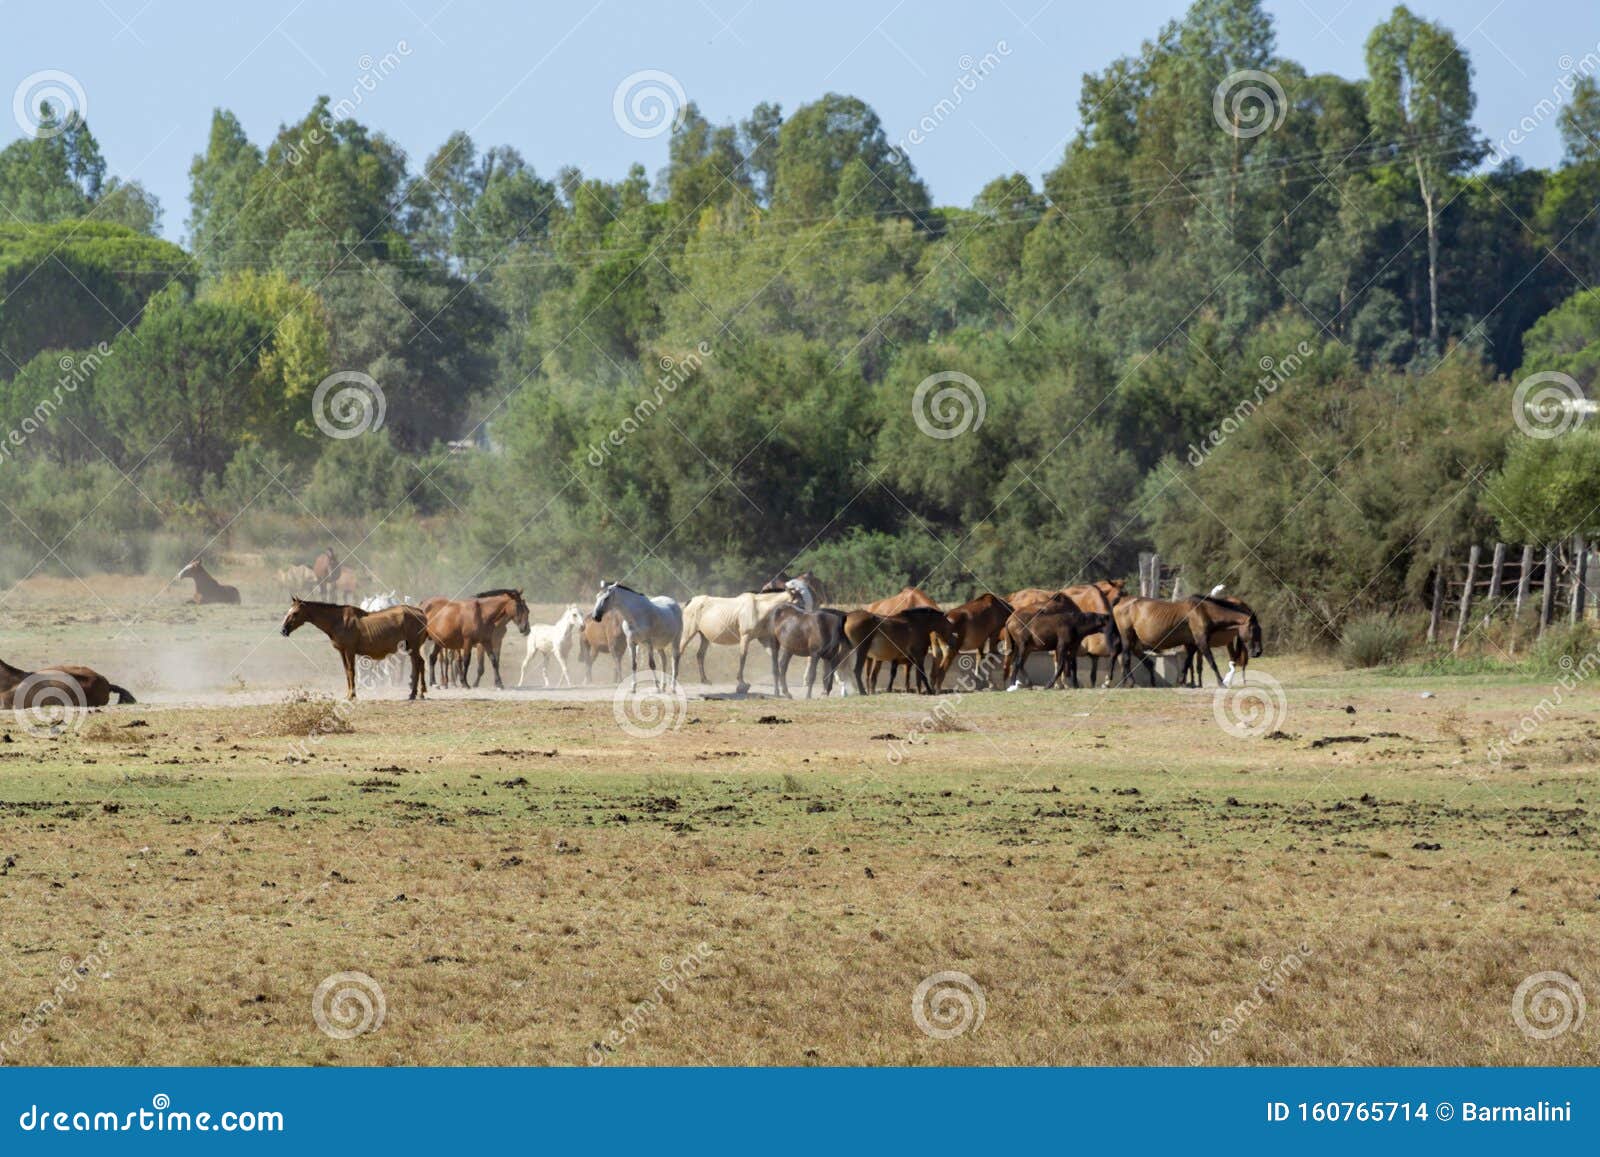 herd of horses on farm in el rocio, andalusia, spain